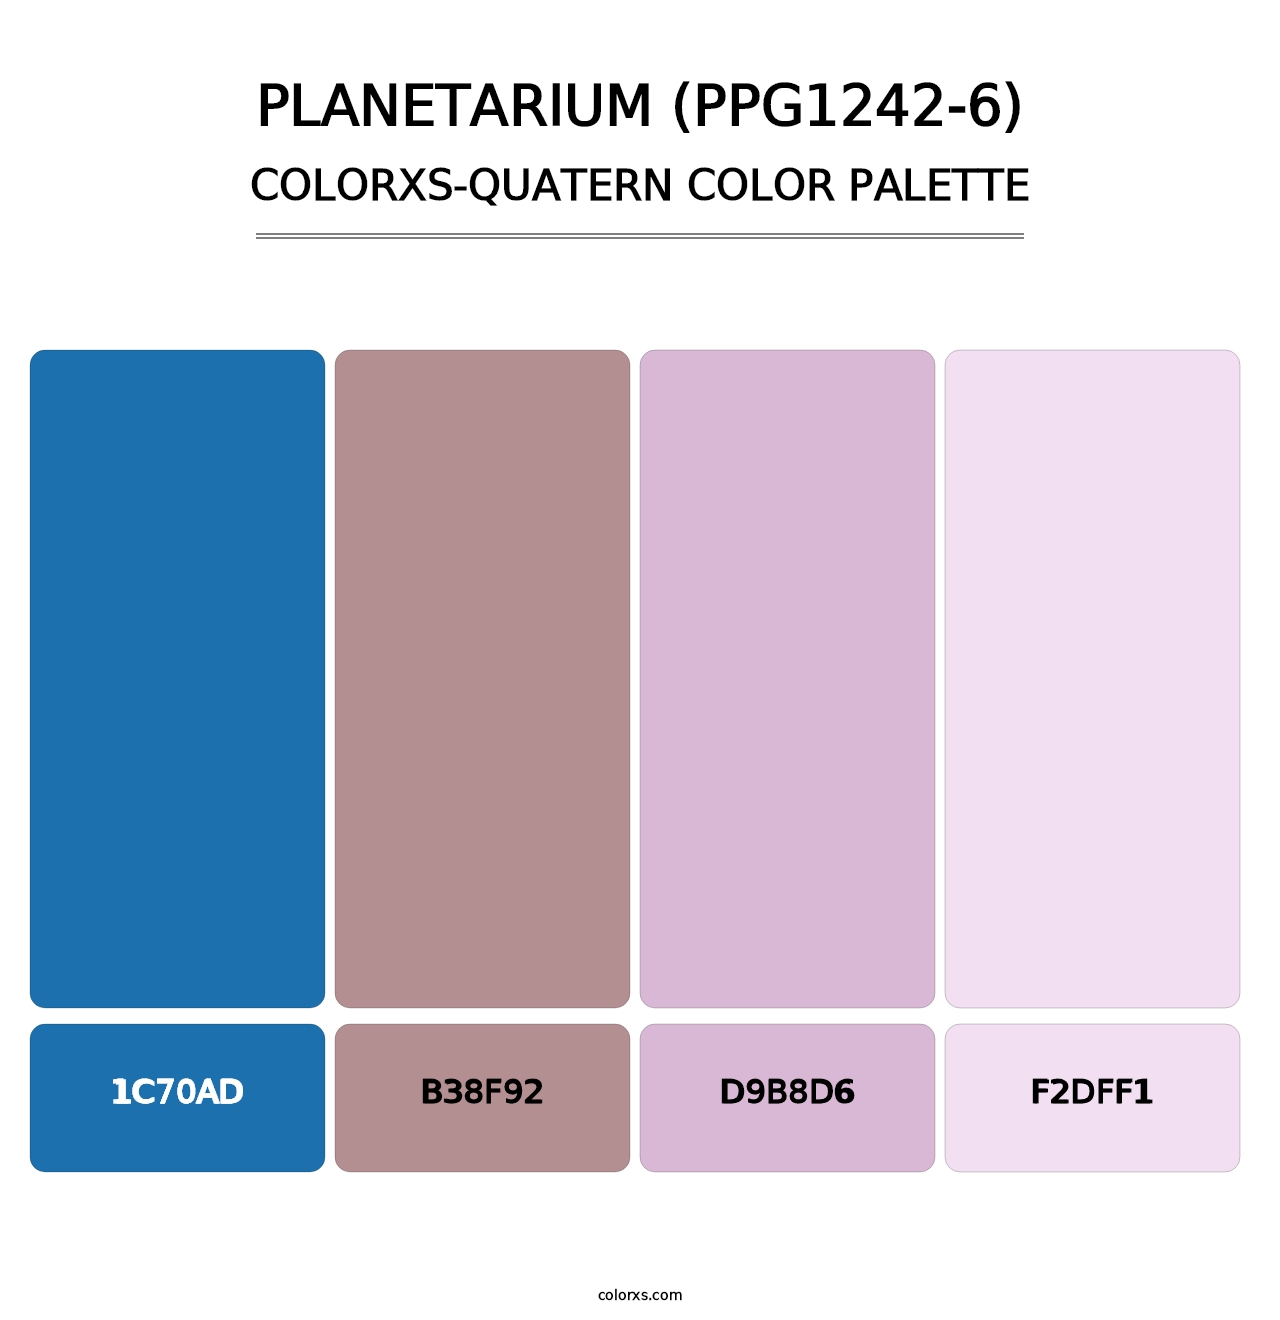 Planetarium (PPG1242-6) - Colorxs Quatern Palette